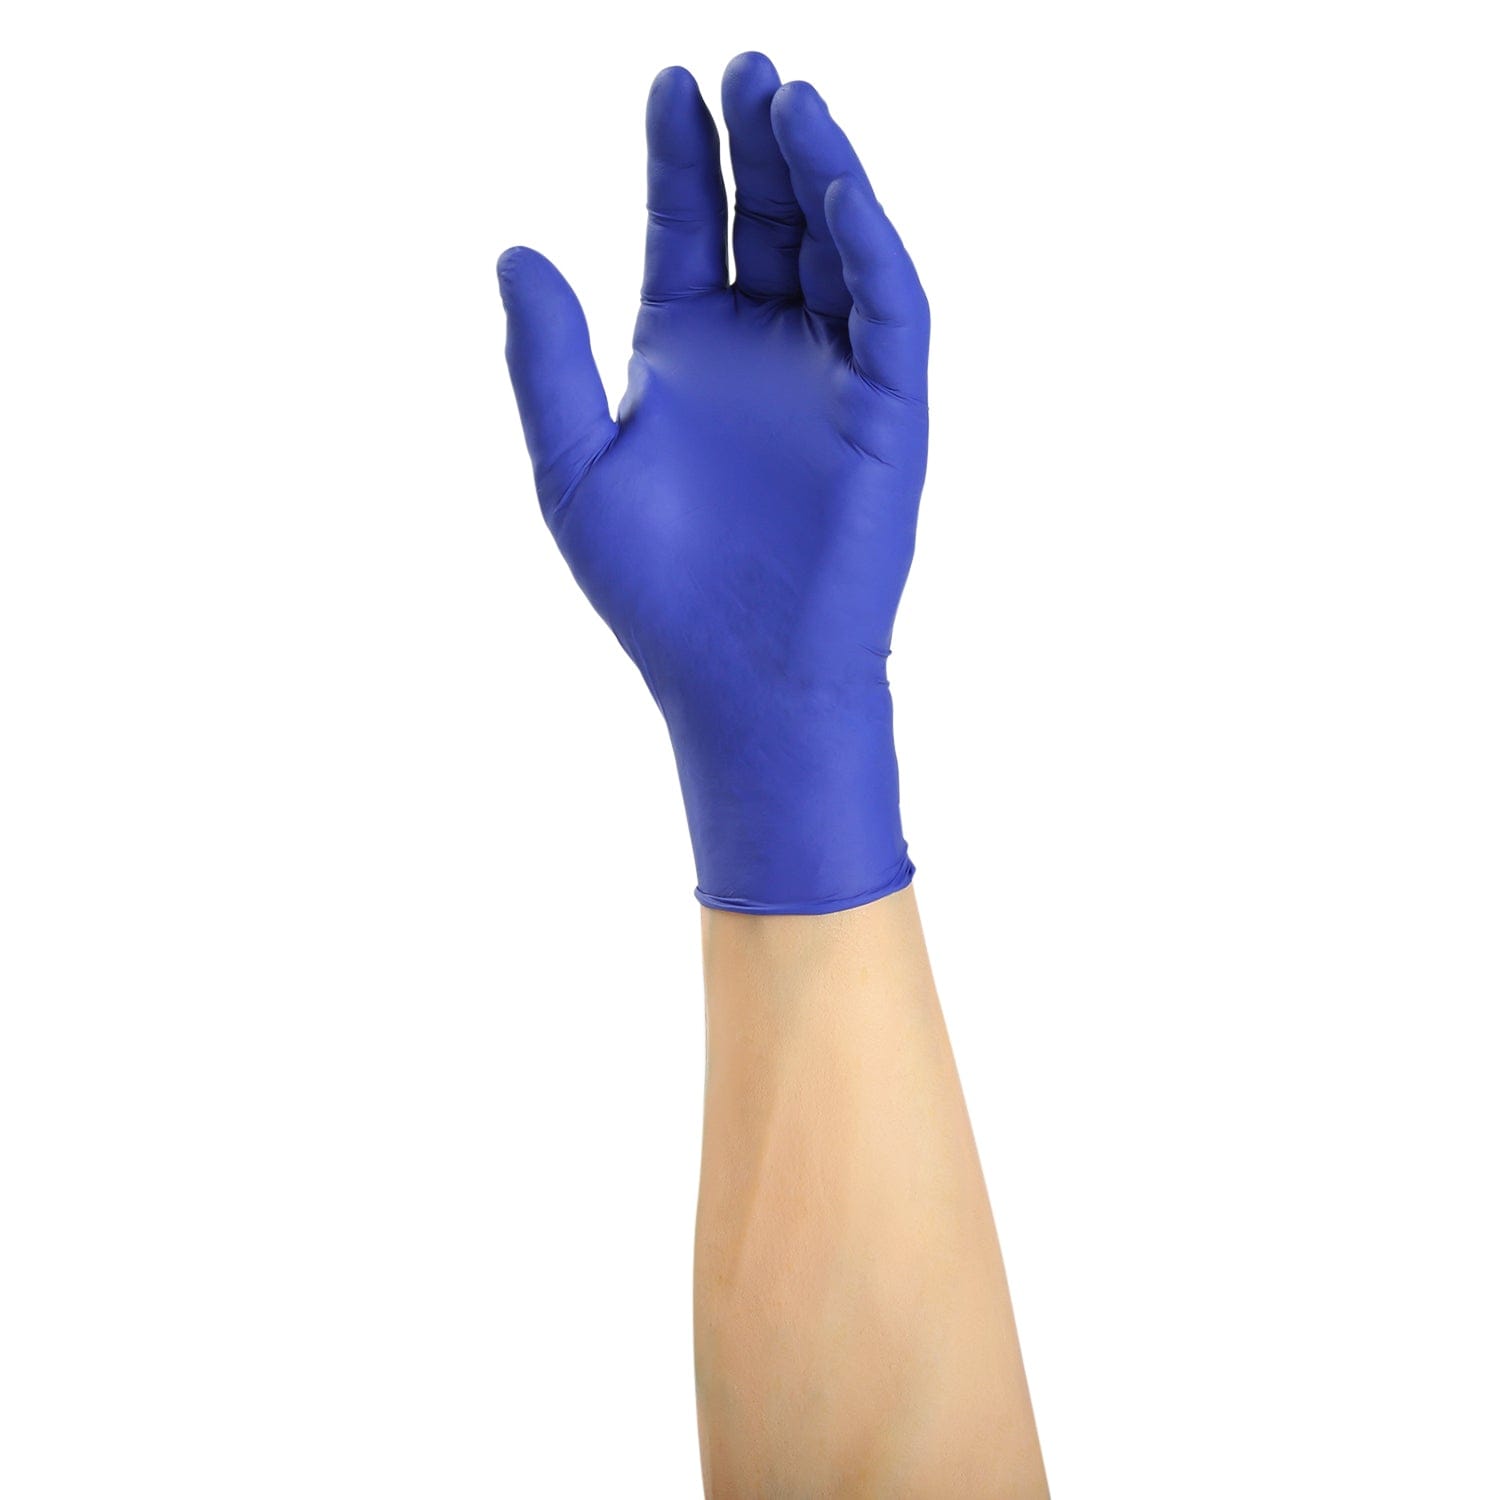 Verge Powder Free Nitrile Gloves, Case of 1,000